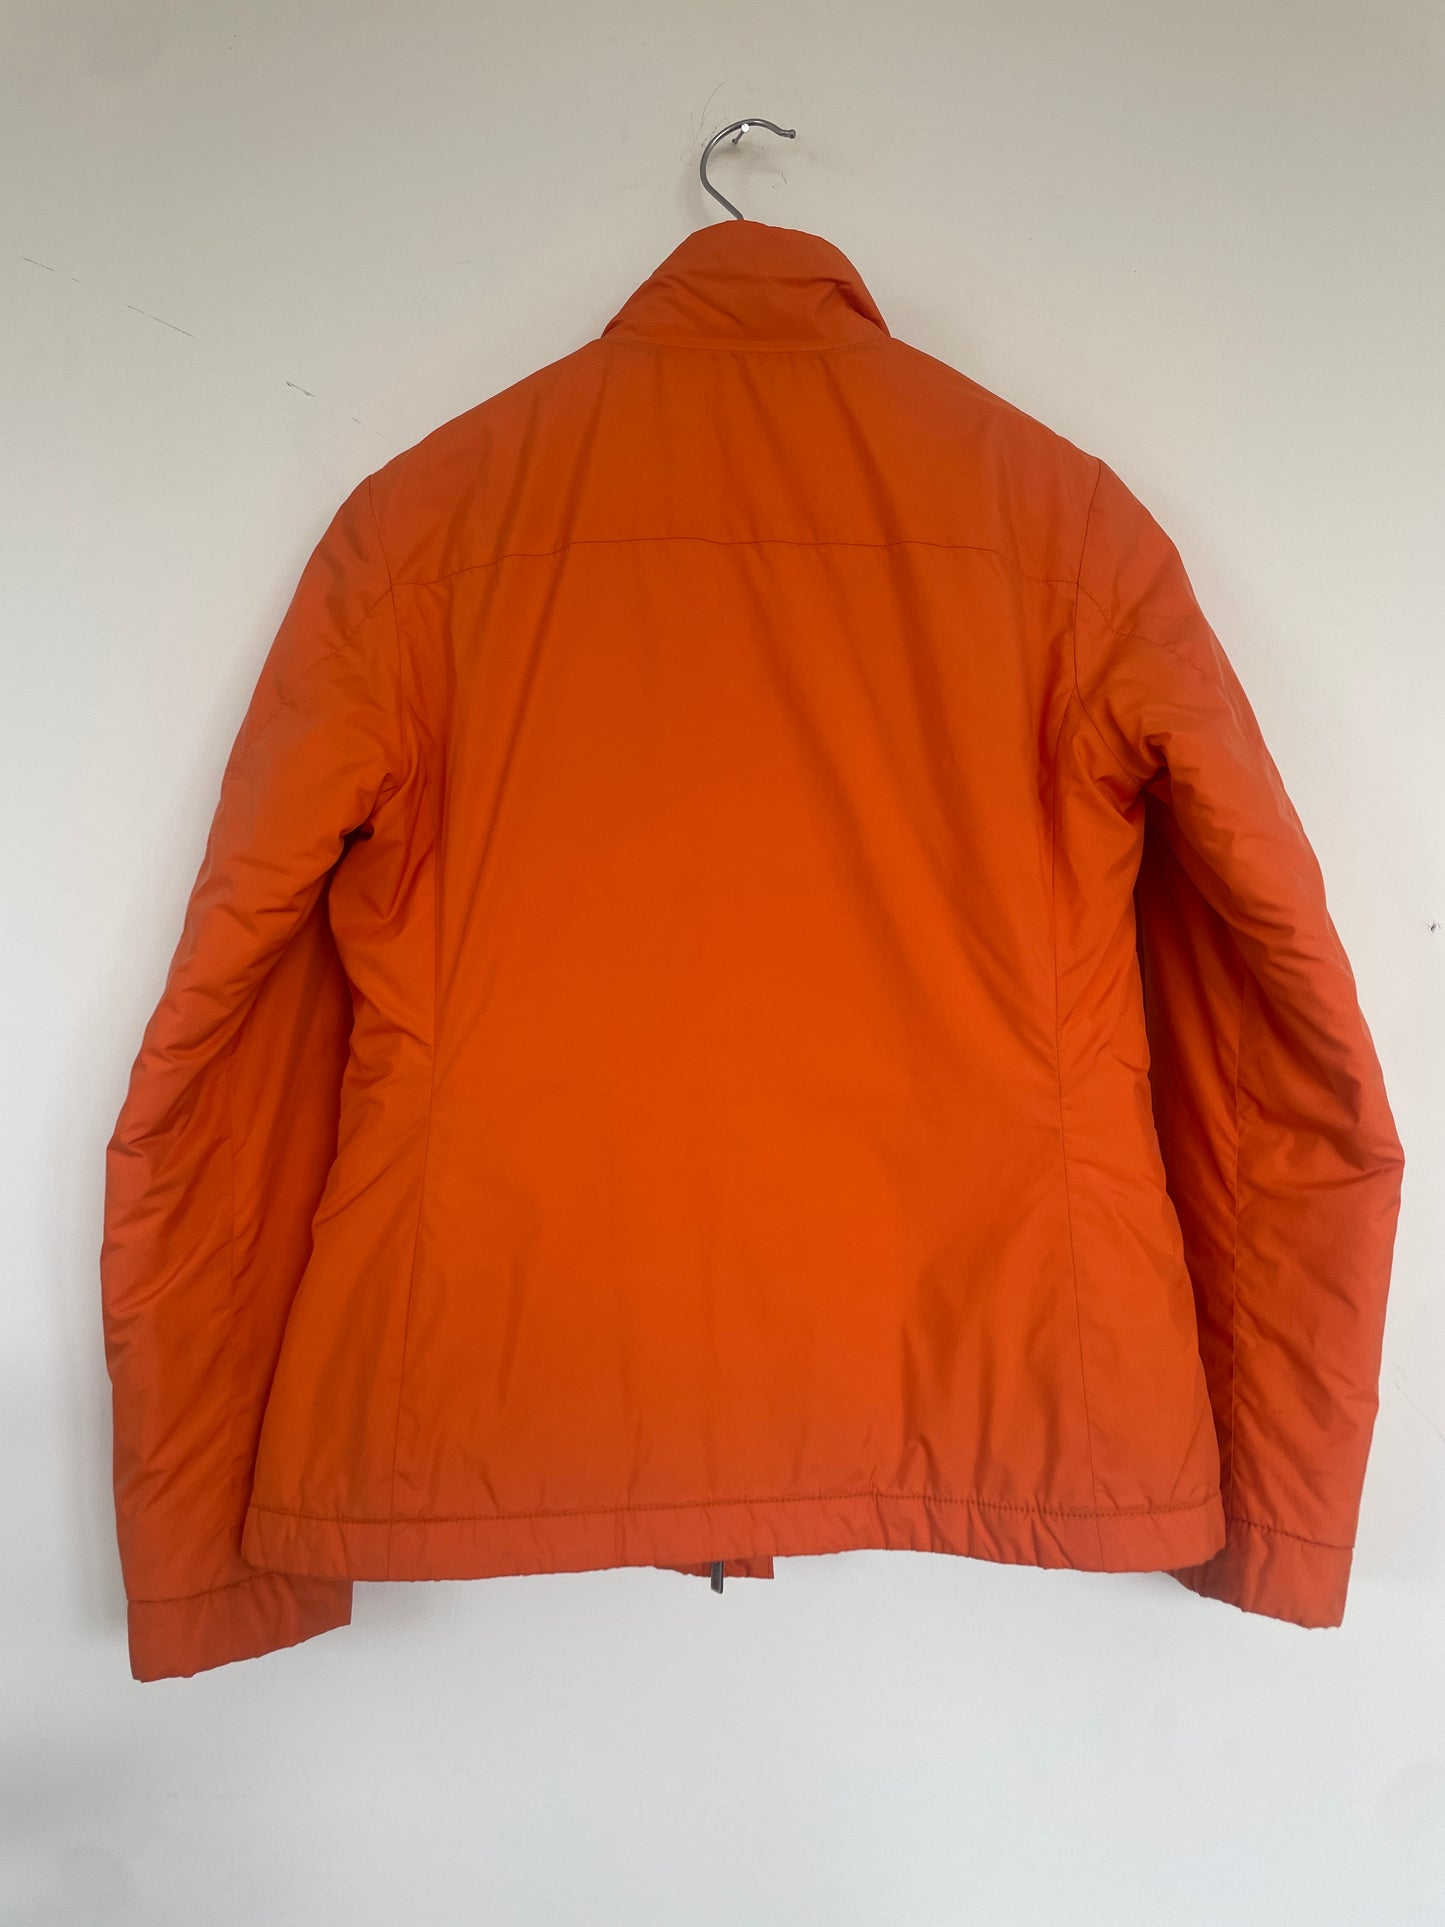 Dirk Bikkembergs 2000s fluorescent orange puffer jacket